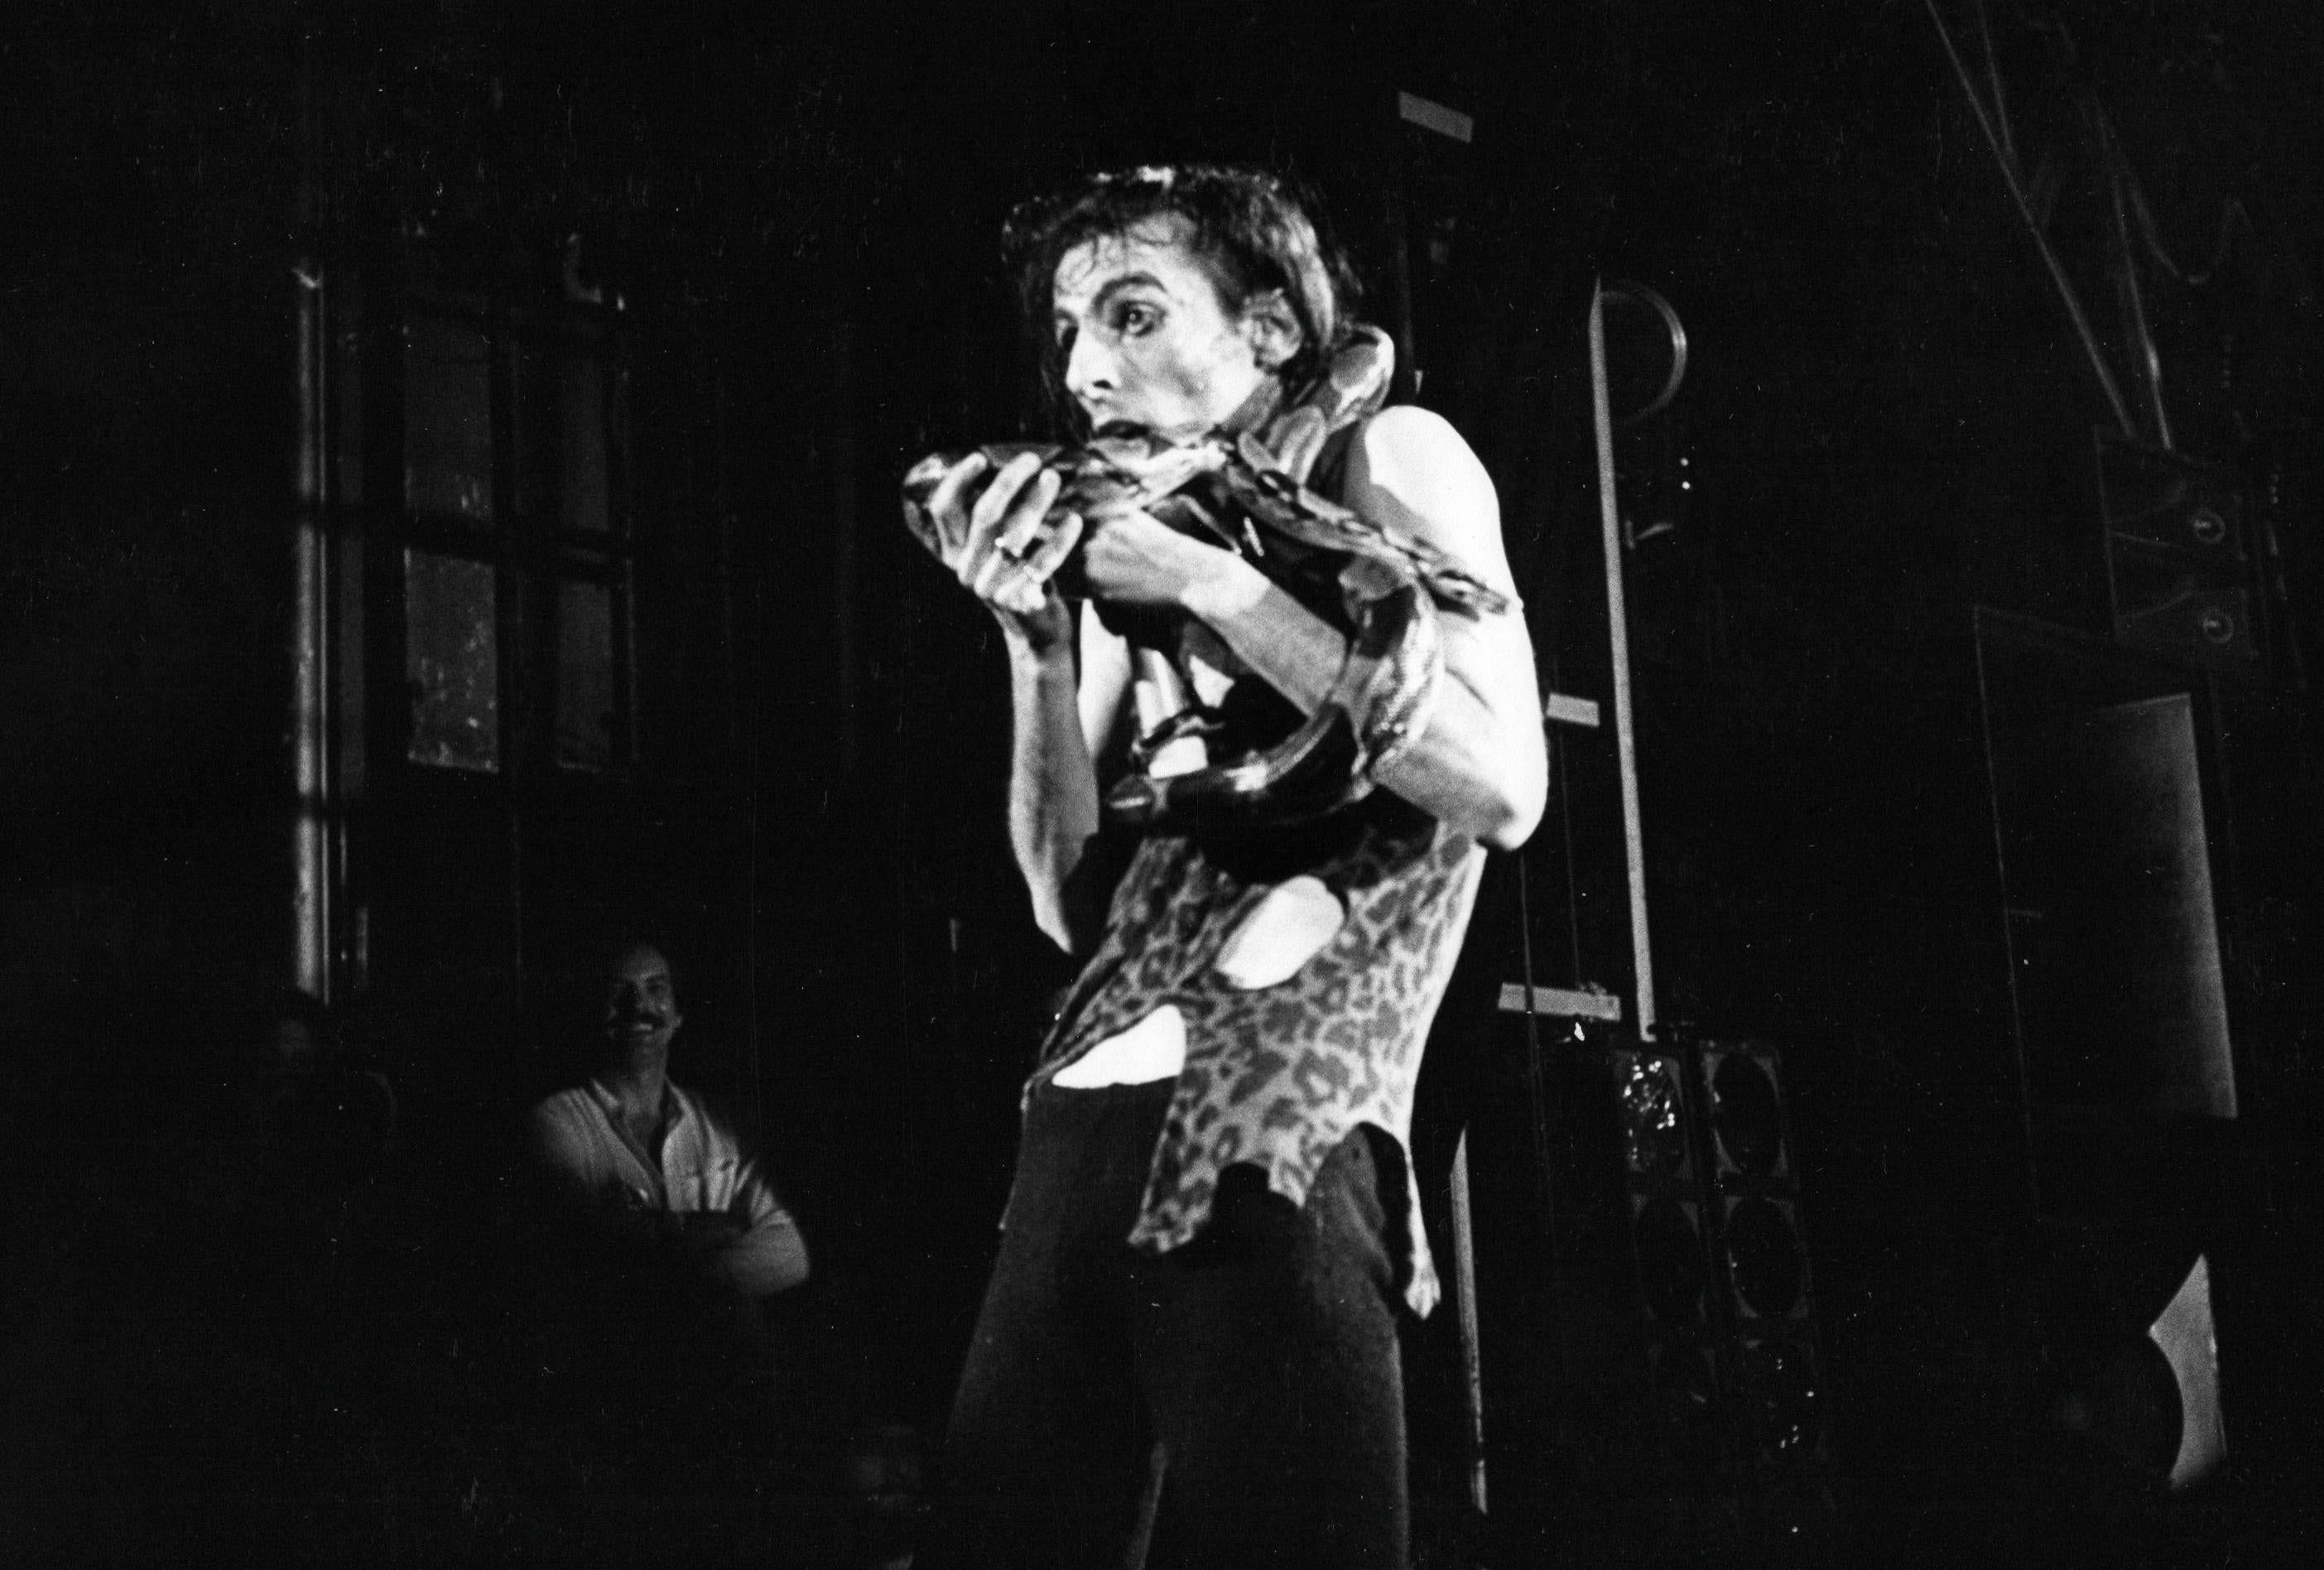 Michael Kagan Portrait Photograph - Alice Cooper Performing with Boa Snake II Vintage Original Photograph